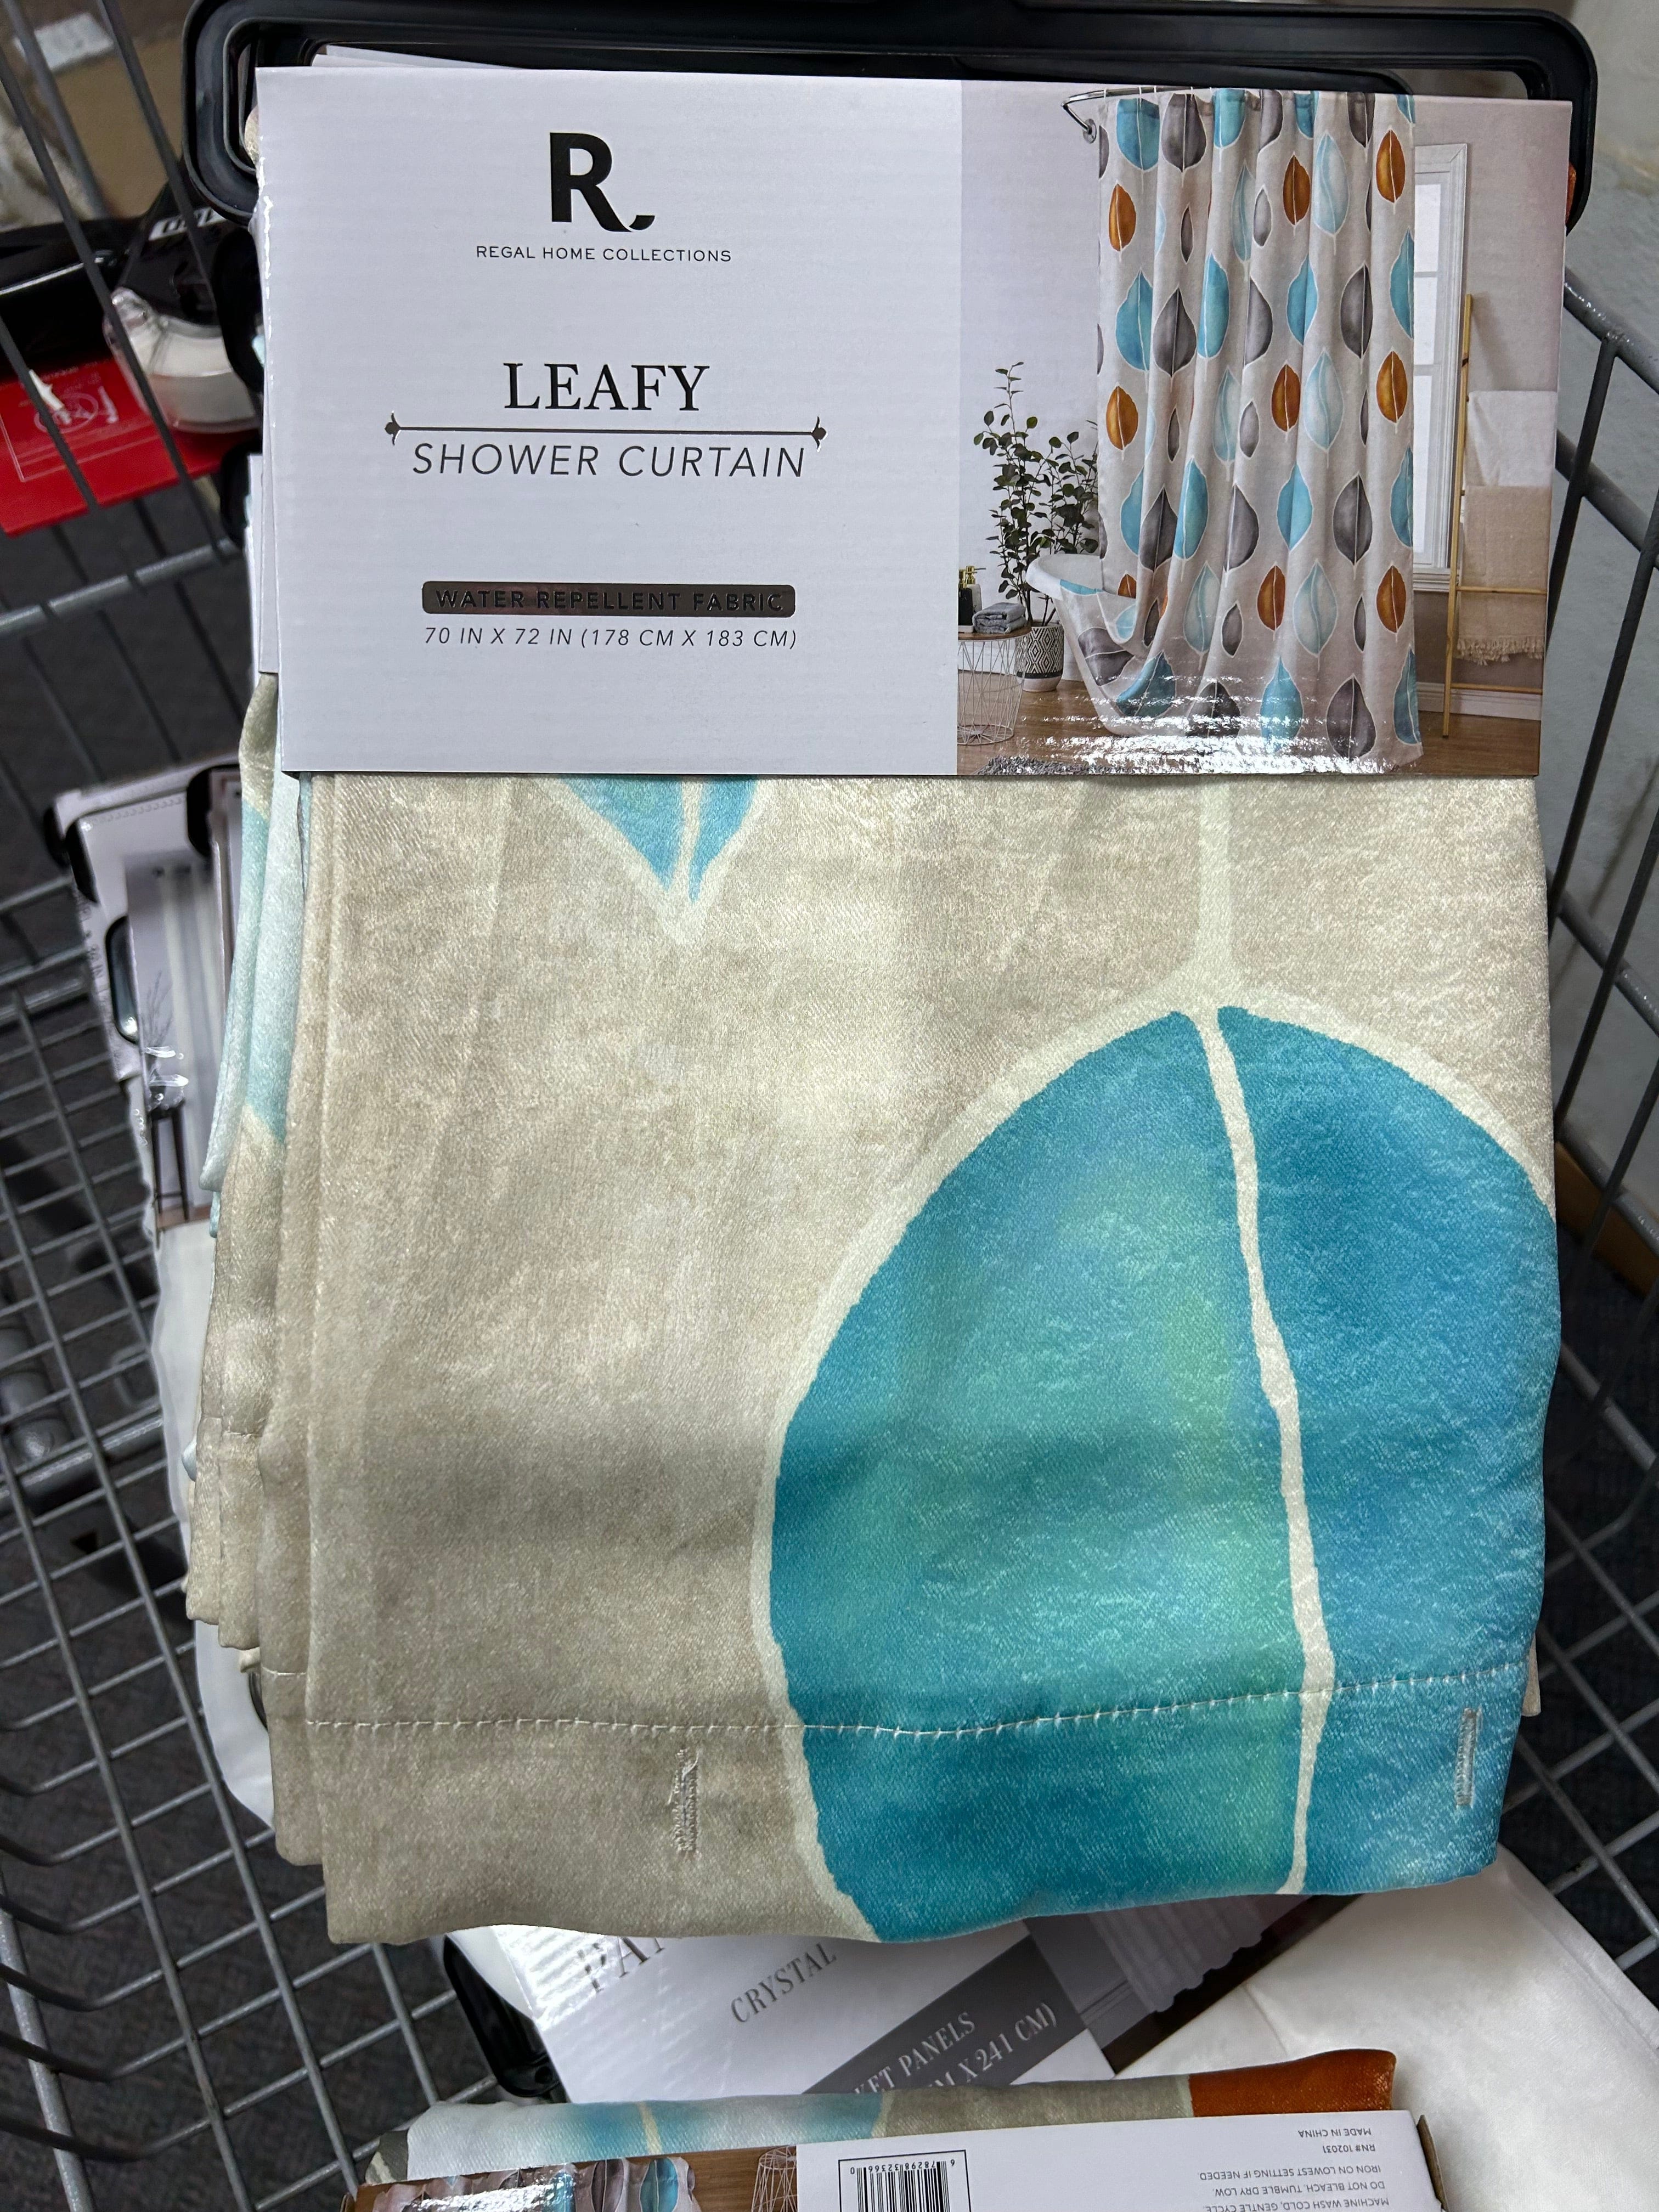 Linen World ‘Leafy’ Heavy Duty Water Resistant Shower Curtain